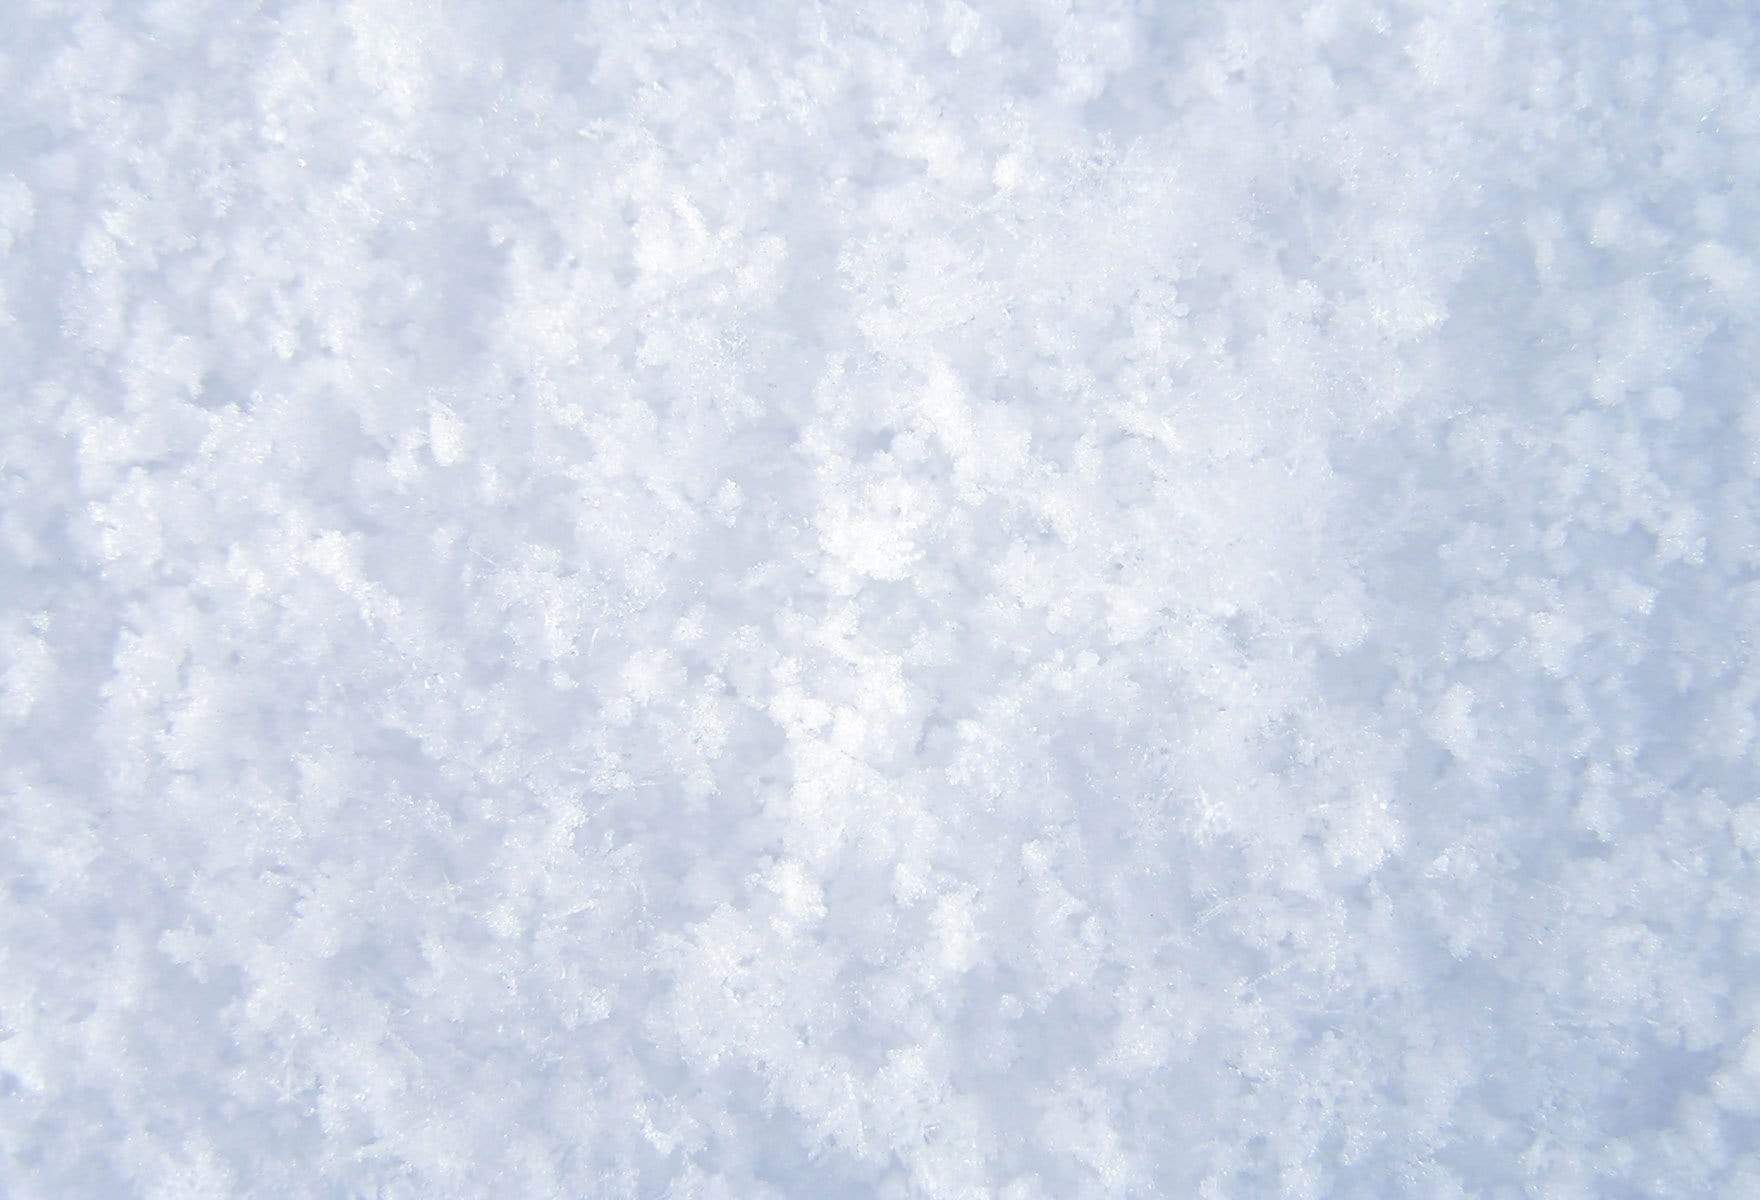 Katebackdrop¡êoKate Winter Snowy Floor Drop for photography Rubber Floor Mat